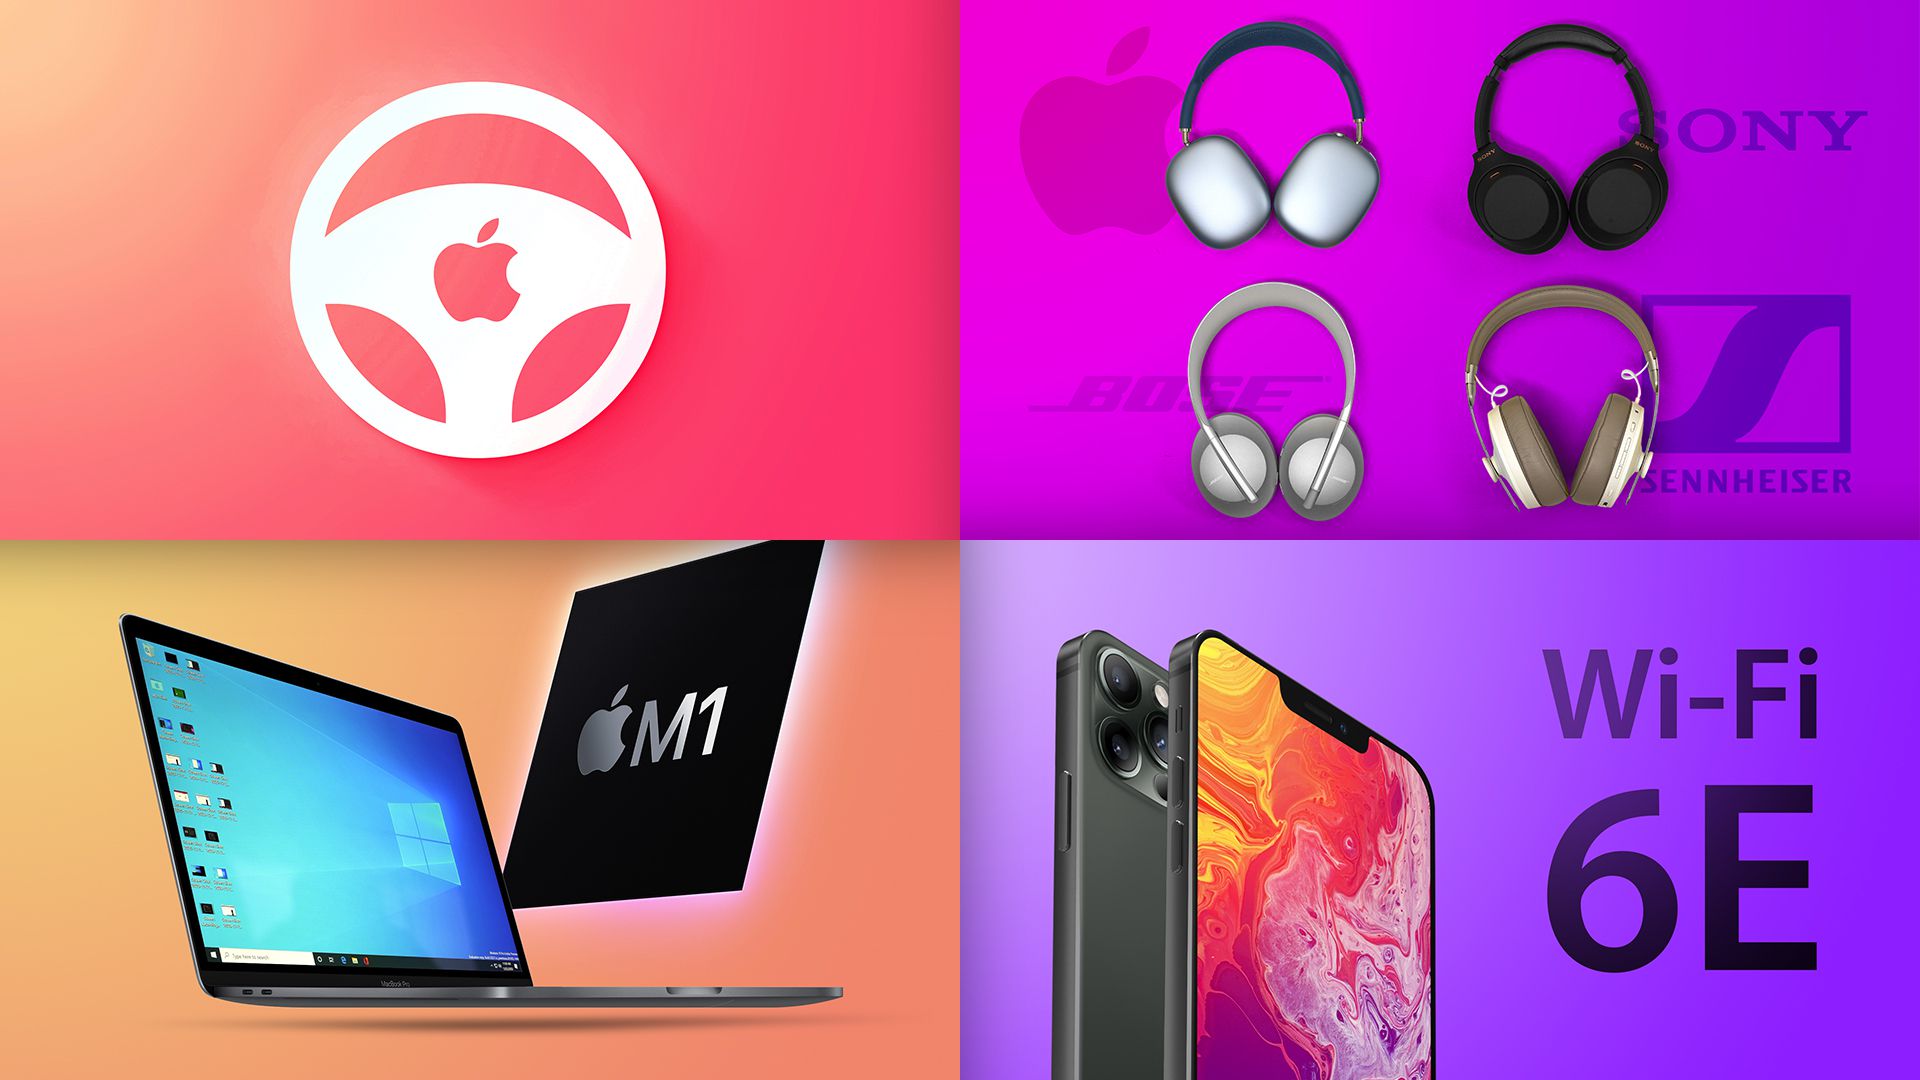 Top Stories: Apple Car Rumors, Windows on an M1 Mac, AirPods Max in Comparison